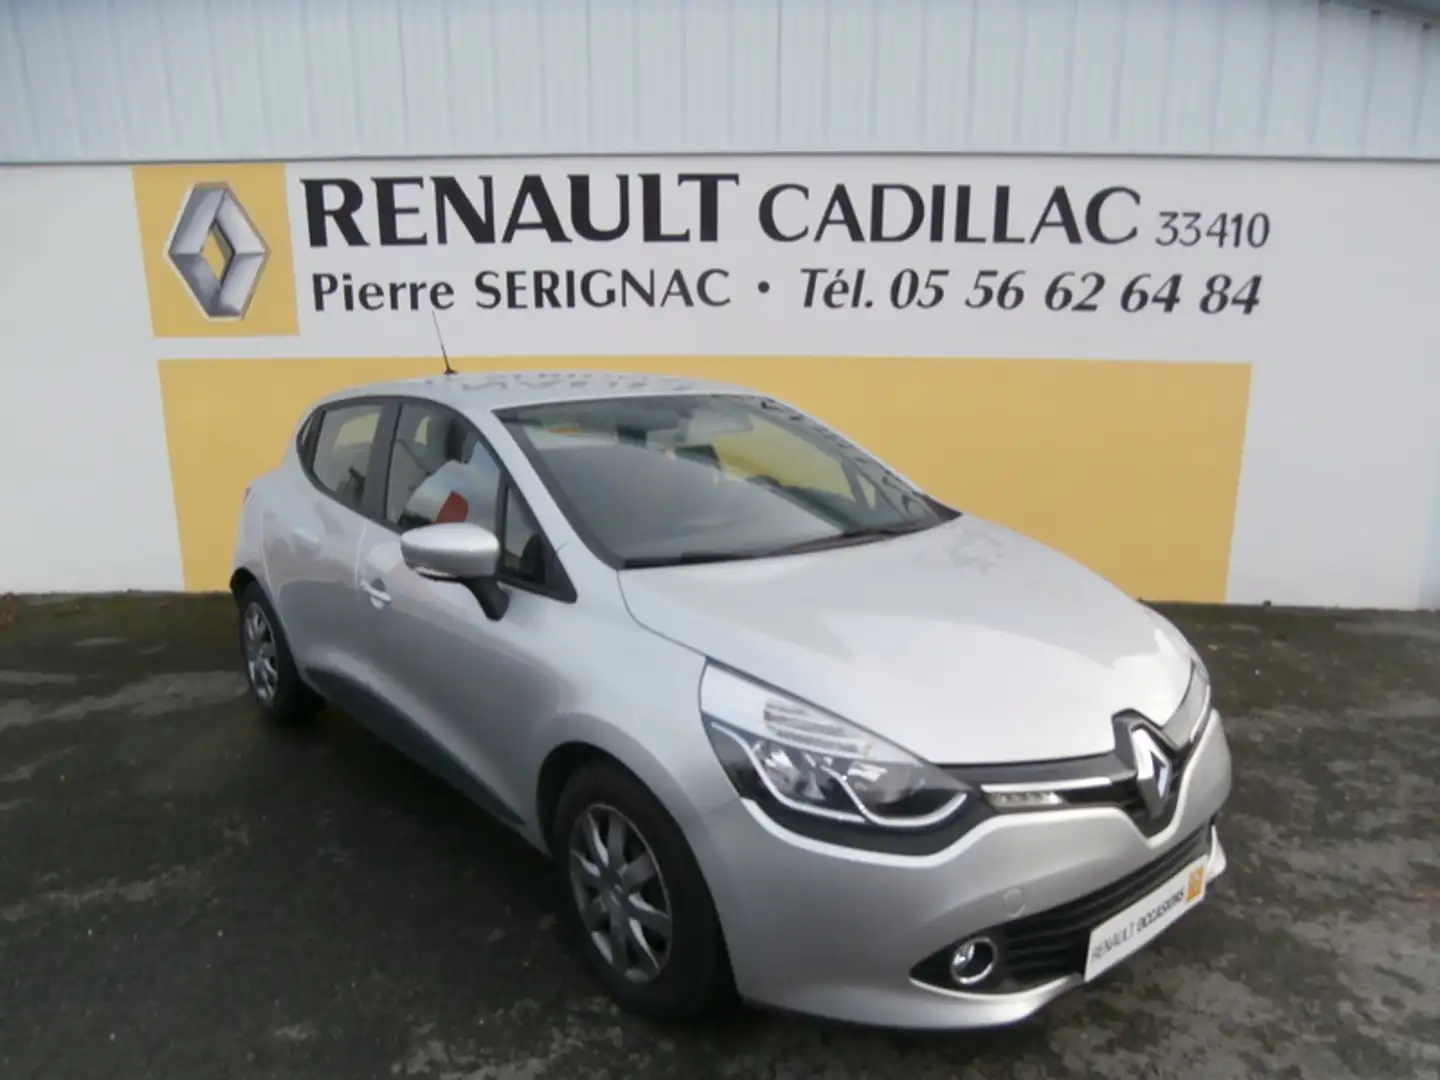 Renault Clio 1.5 dci 75 business eco ² - 1